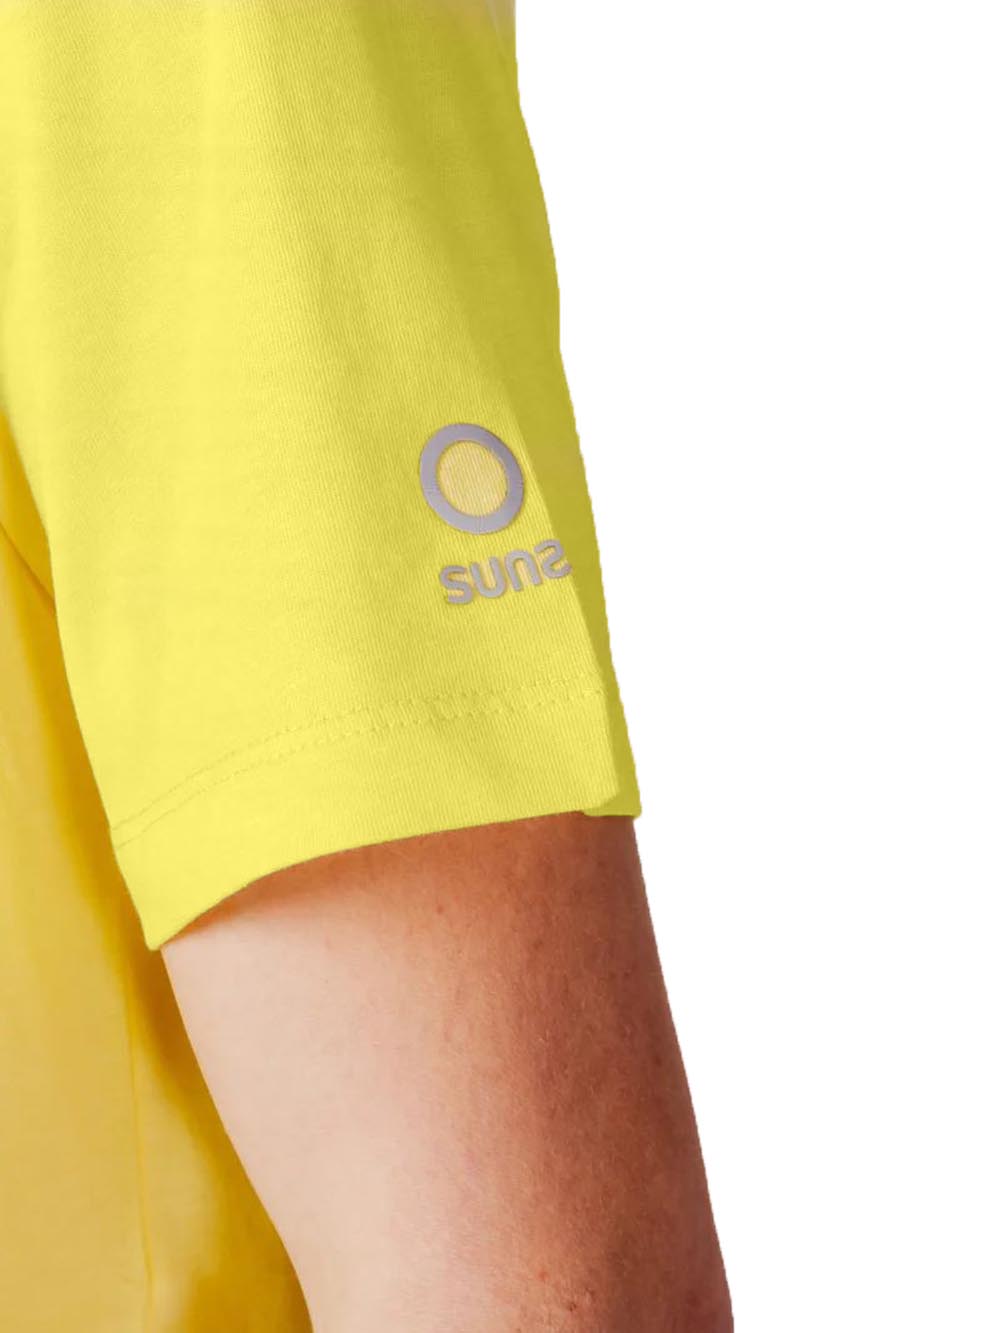 Suns T-shirt Uomo Paolo Basic Tss01048u Giallo